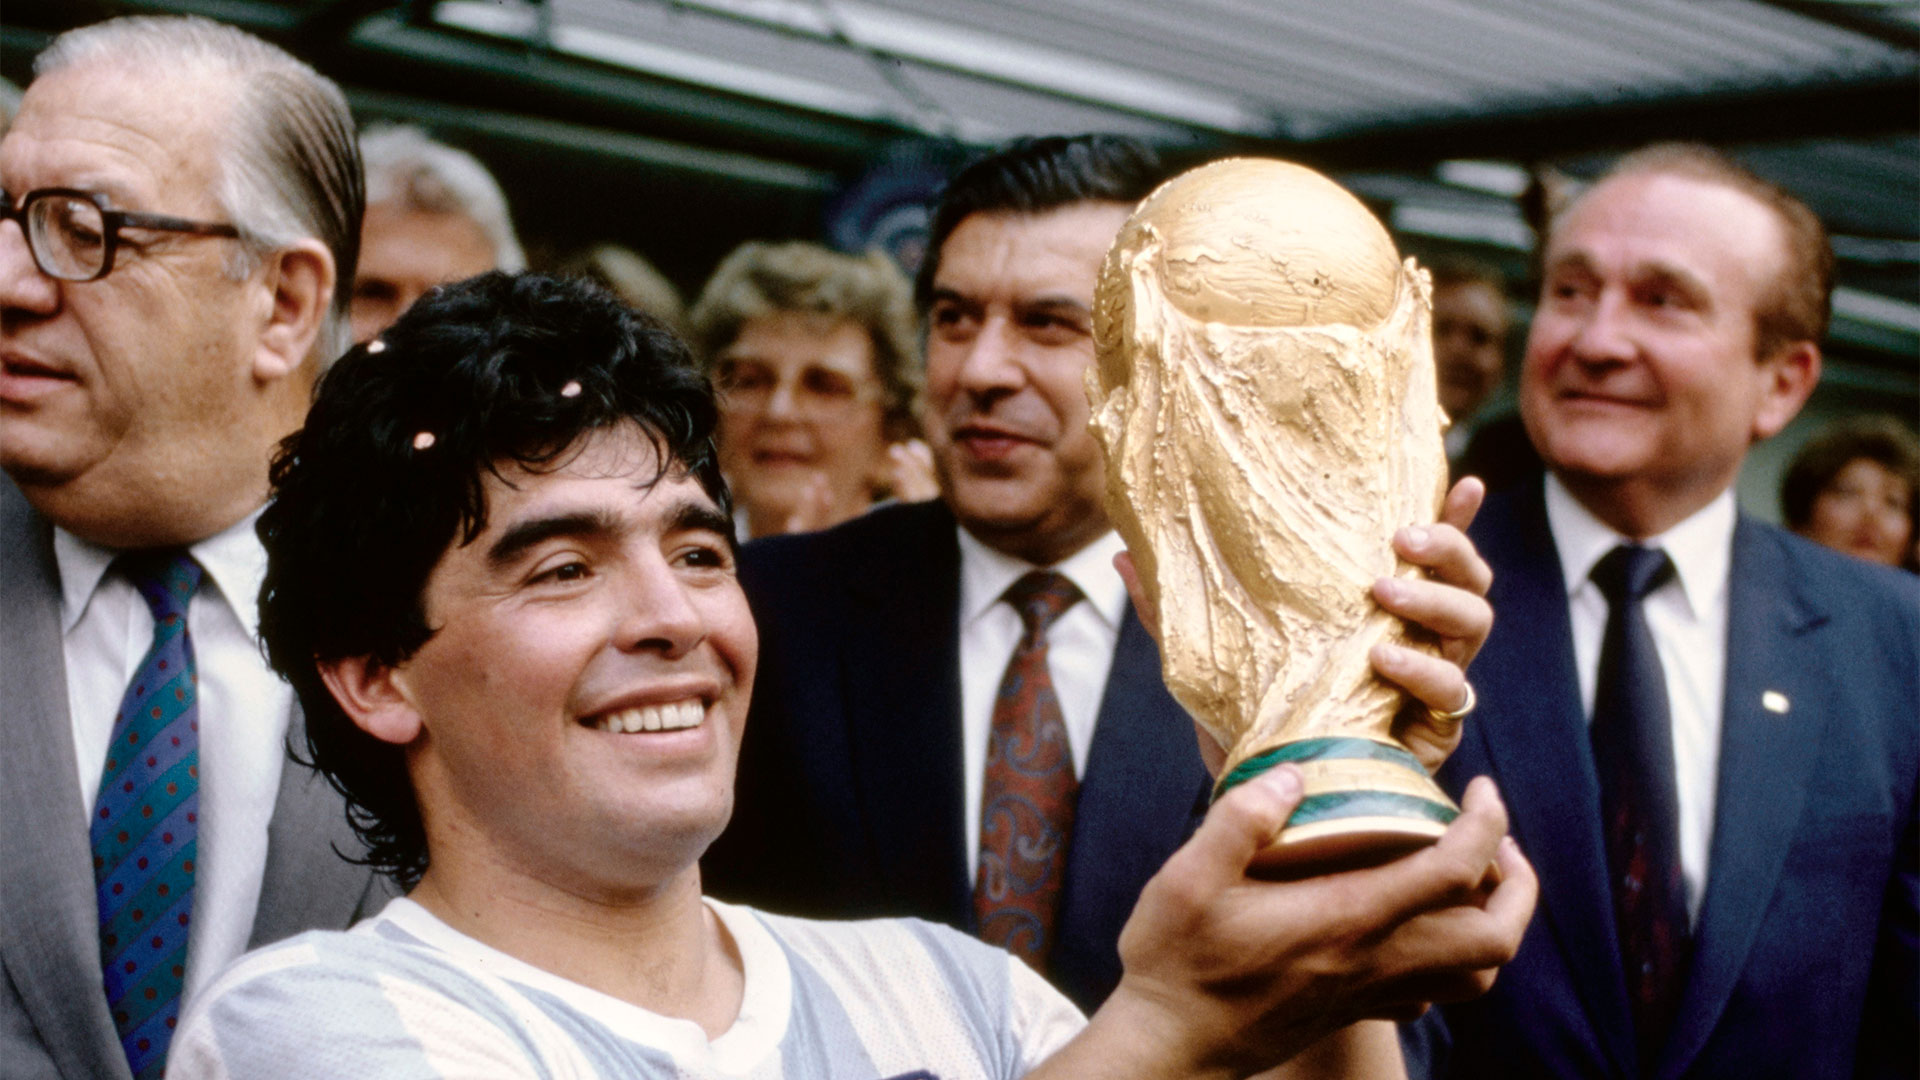 Diego Maradona sostiene la Copa del Mundo, 29 de junio de 1986 (Foto: Mike King/Allsport/Getty Images/Hulton Archive)